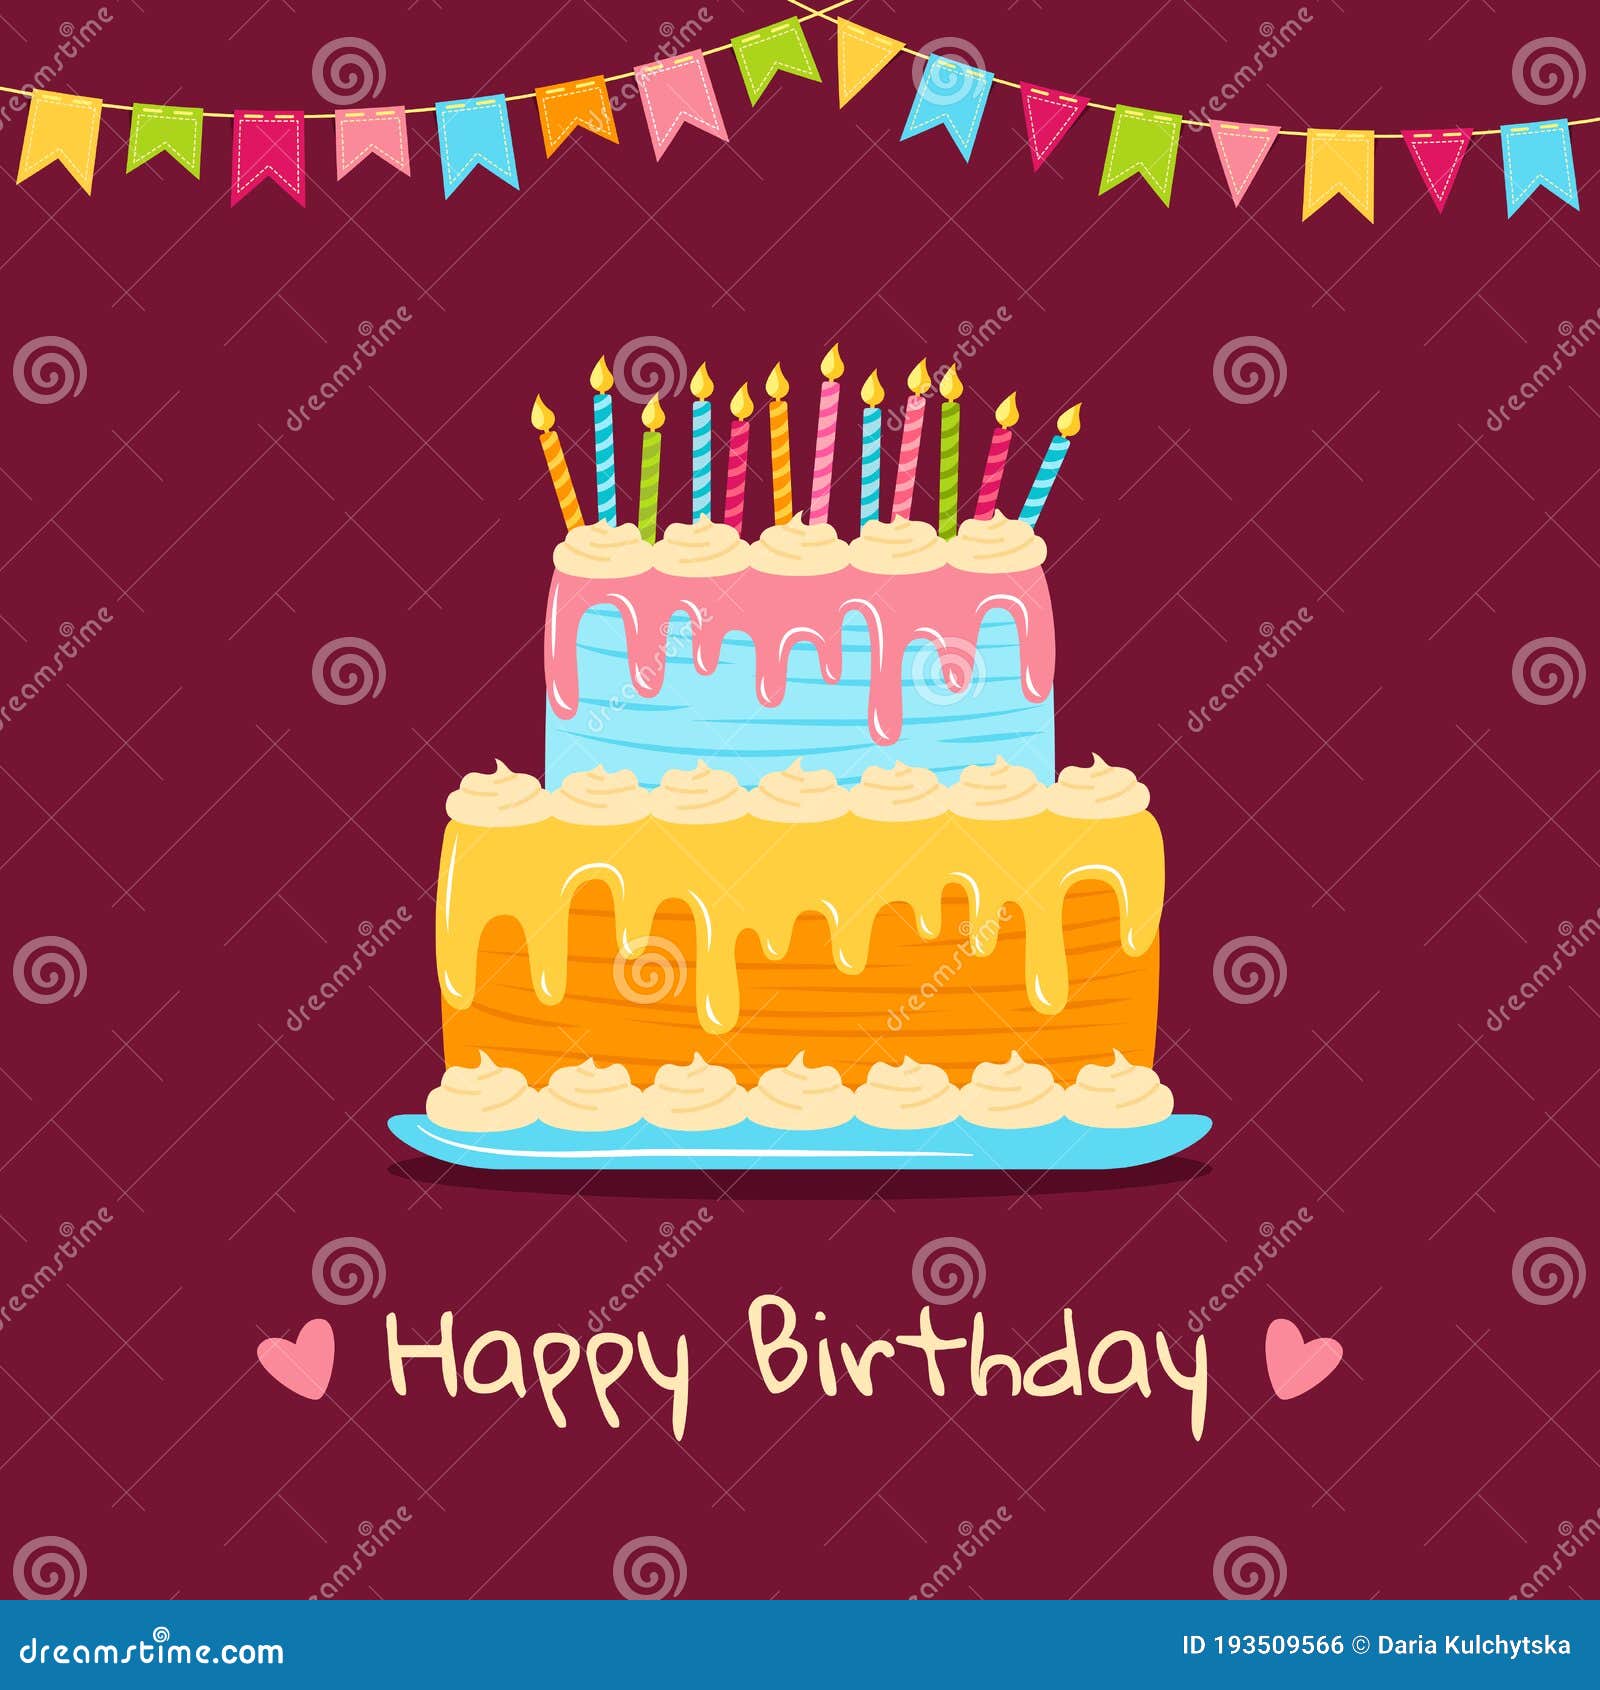 Birthday Greeting Cake Flat Dessert Stars Vector Stock Vector ...